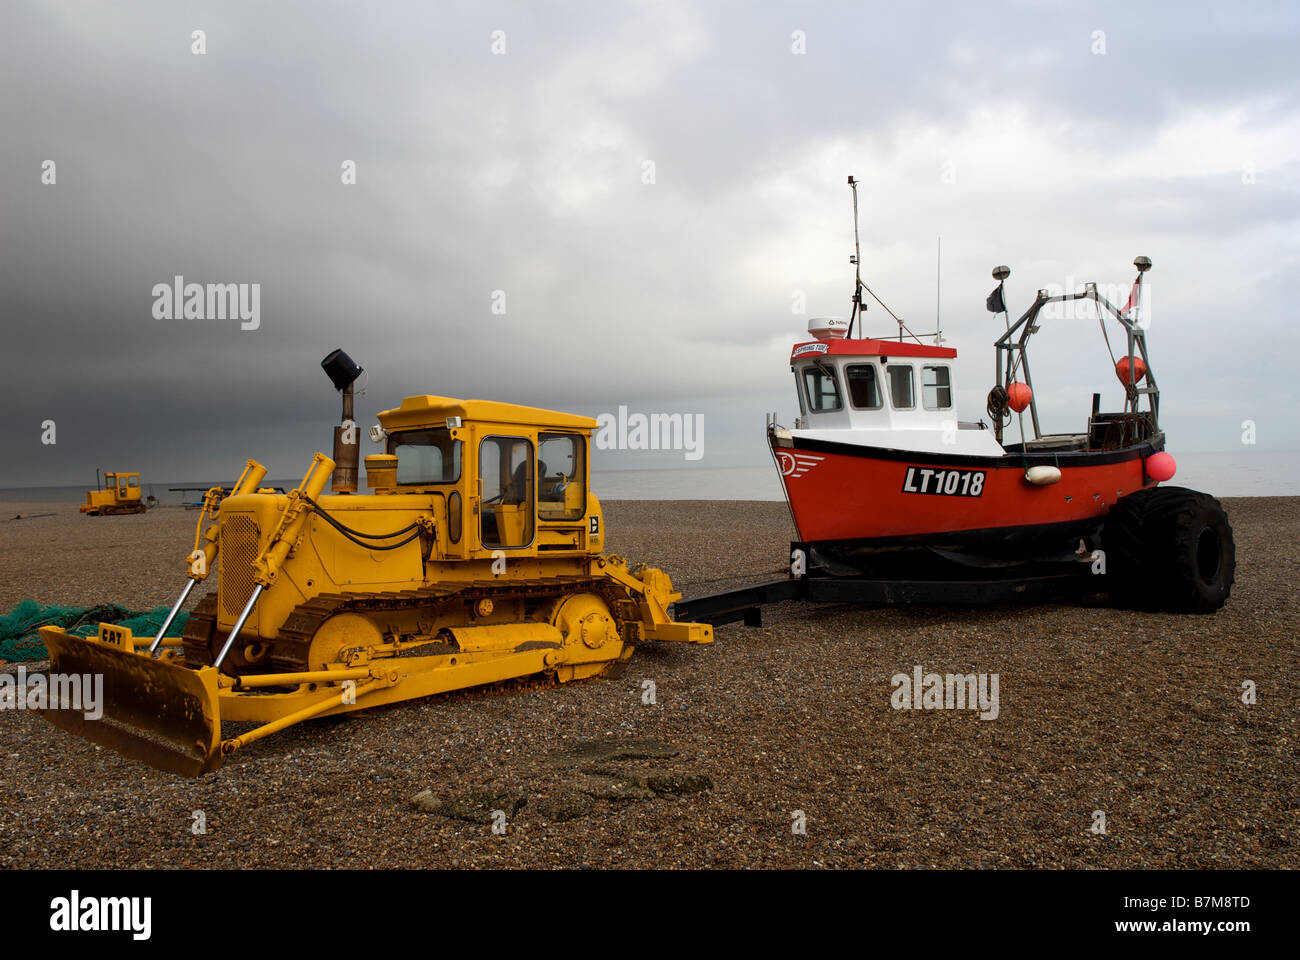 Fishing boat, Aldeburgh, Suffolk, UK. Stock Photo